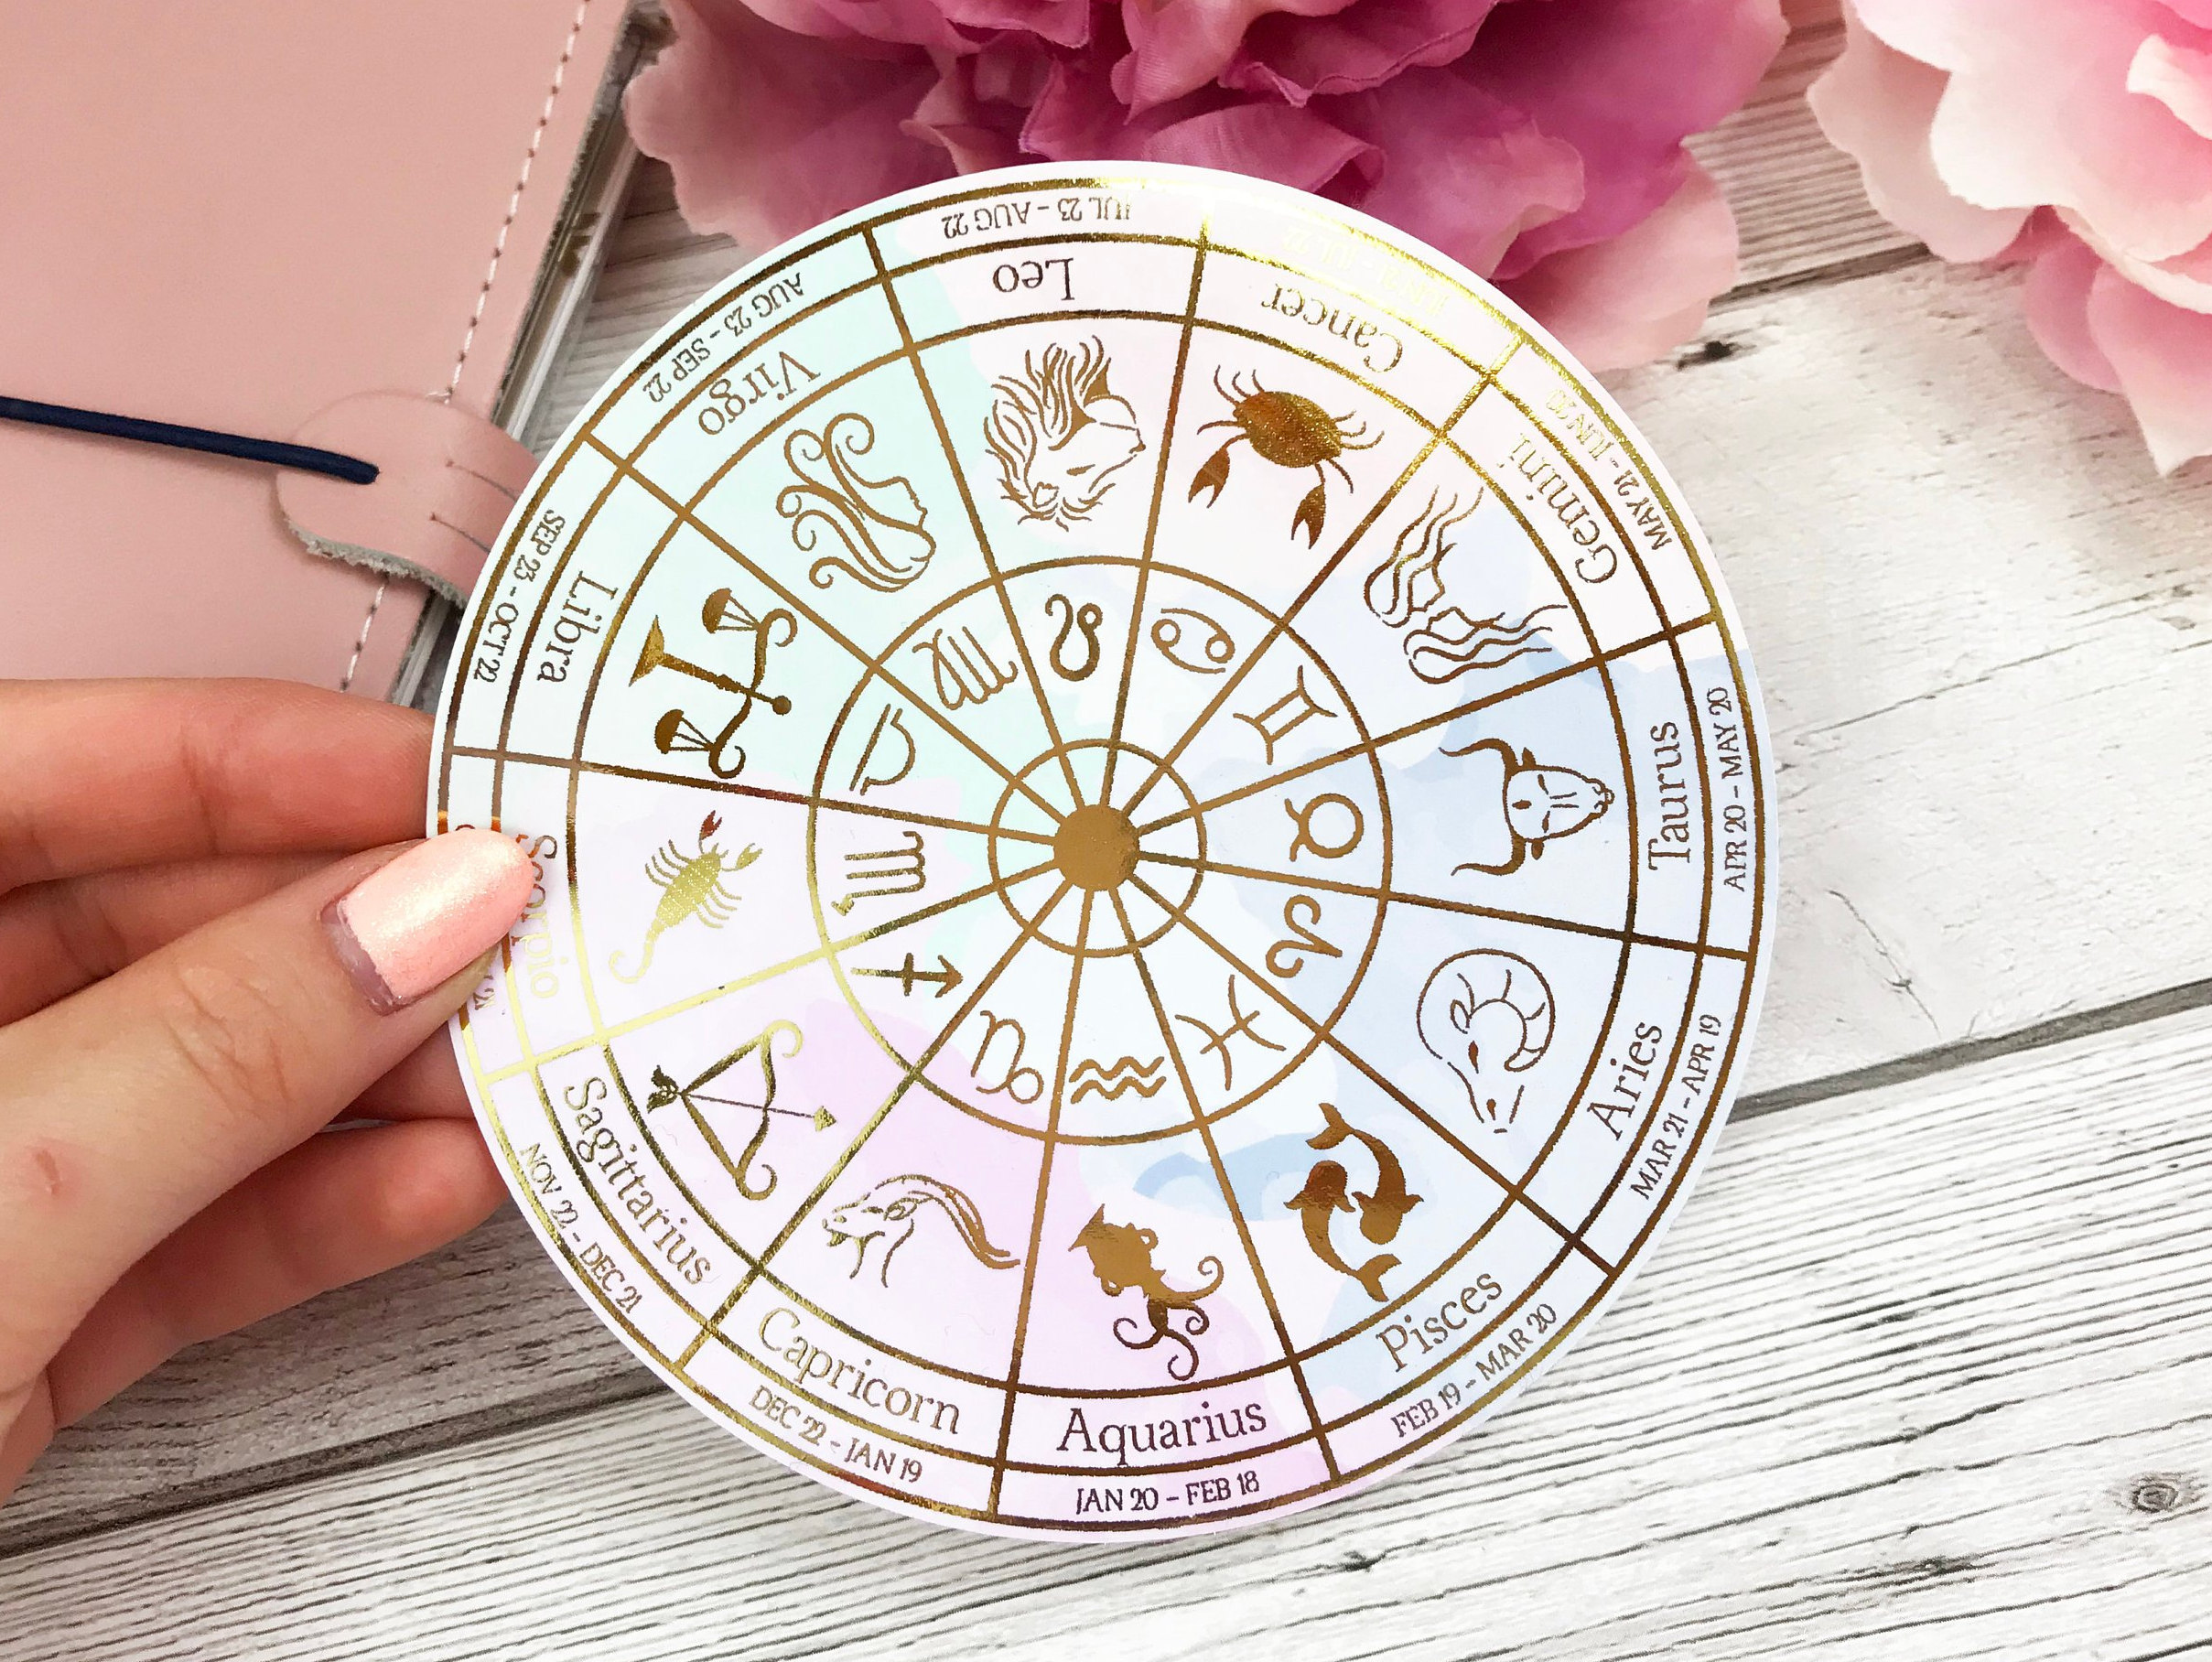 Sagittarius Decal  Zodiac Decal  Zodiac Decor  Inspirational Decor  Zodiac Wheel Decal  Astrology Decal  Astrology Decor  Manifest